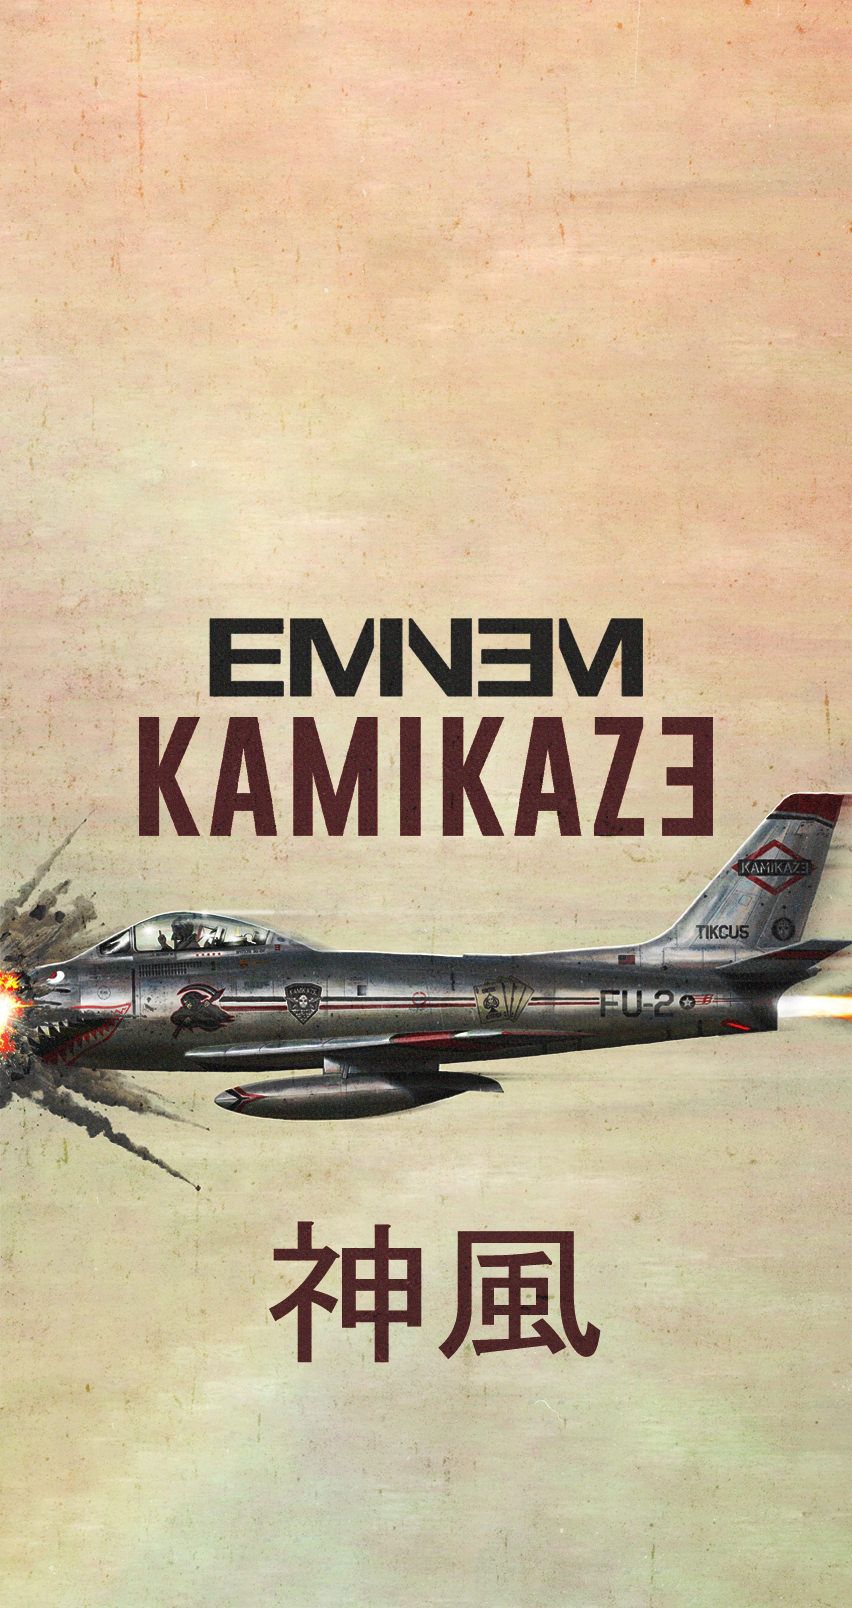 Eminem Kamikaze Wallpaper By @bandicootdesign - Eminem Kamikaze Wallpaper Iphone , HD Wallpaper & Backgrounds